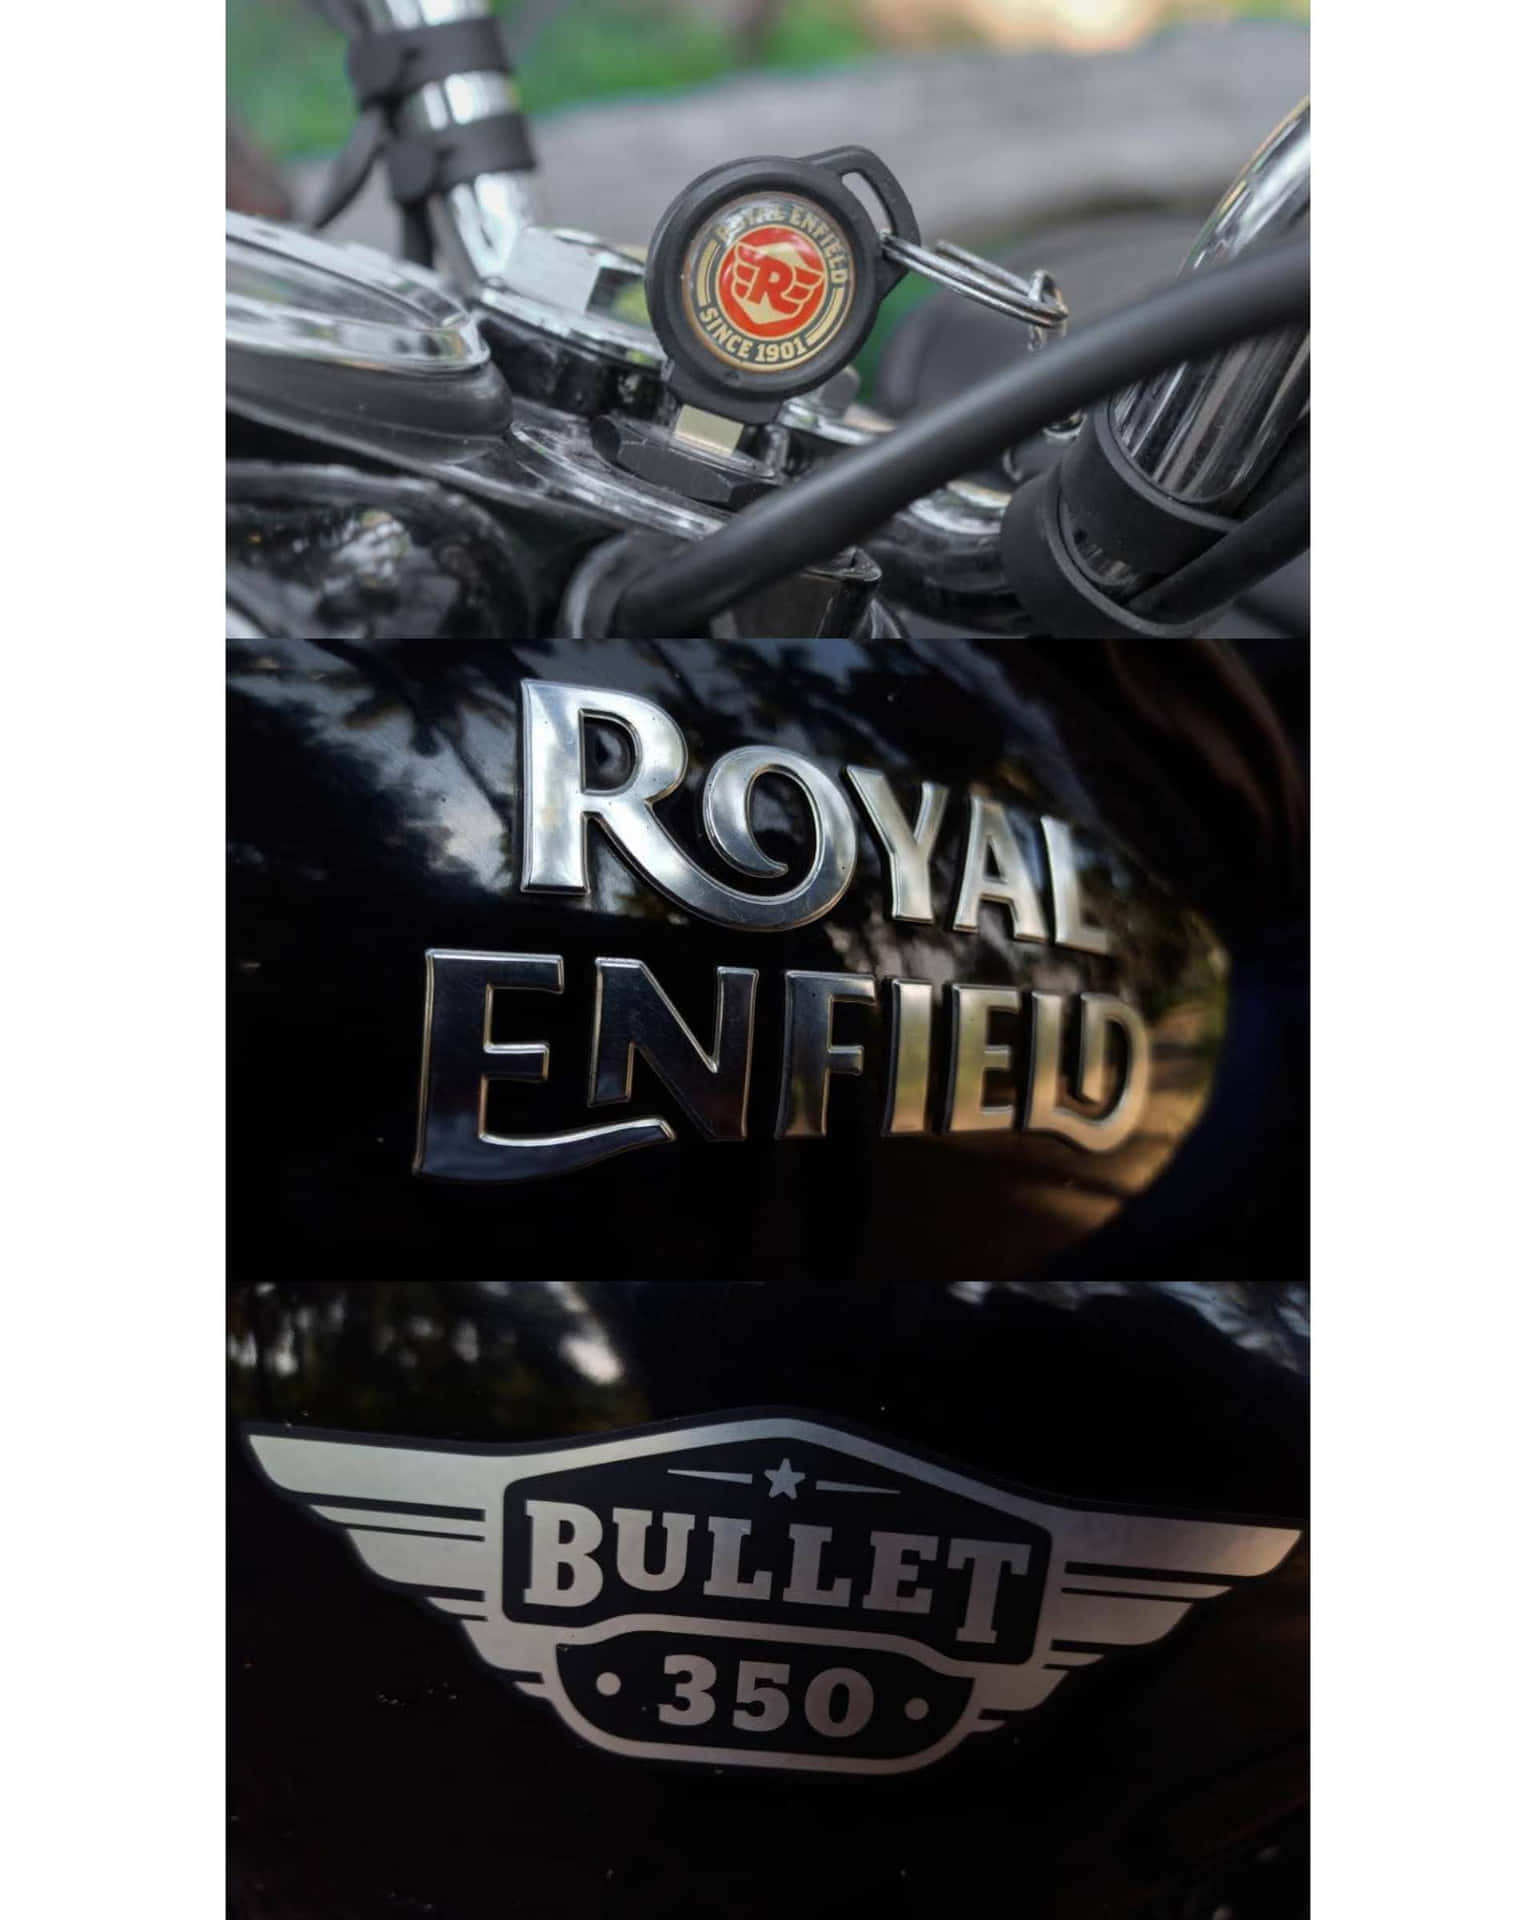 Guidarela Royal Enfield Bullet - La Sensazione Di Libertà